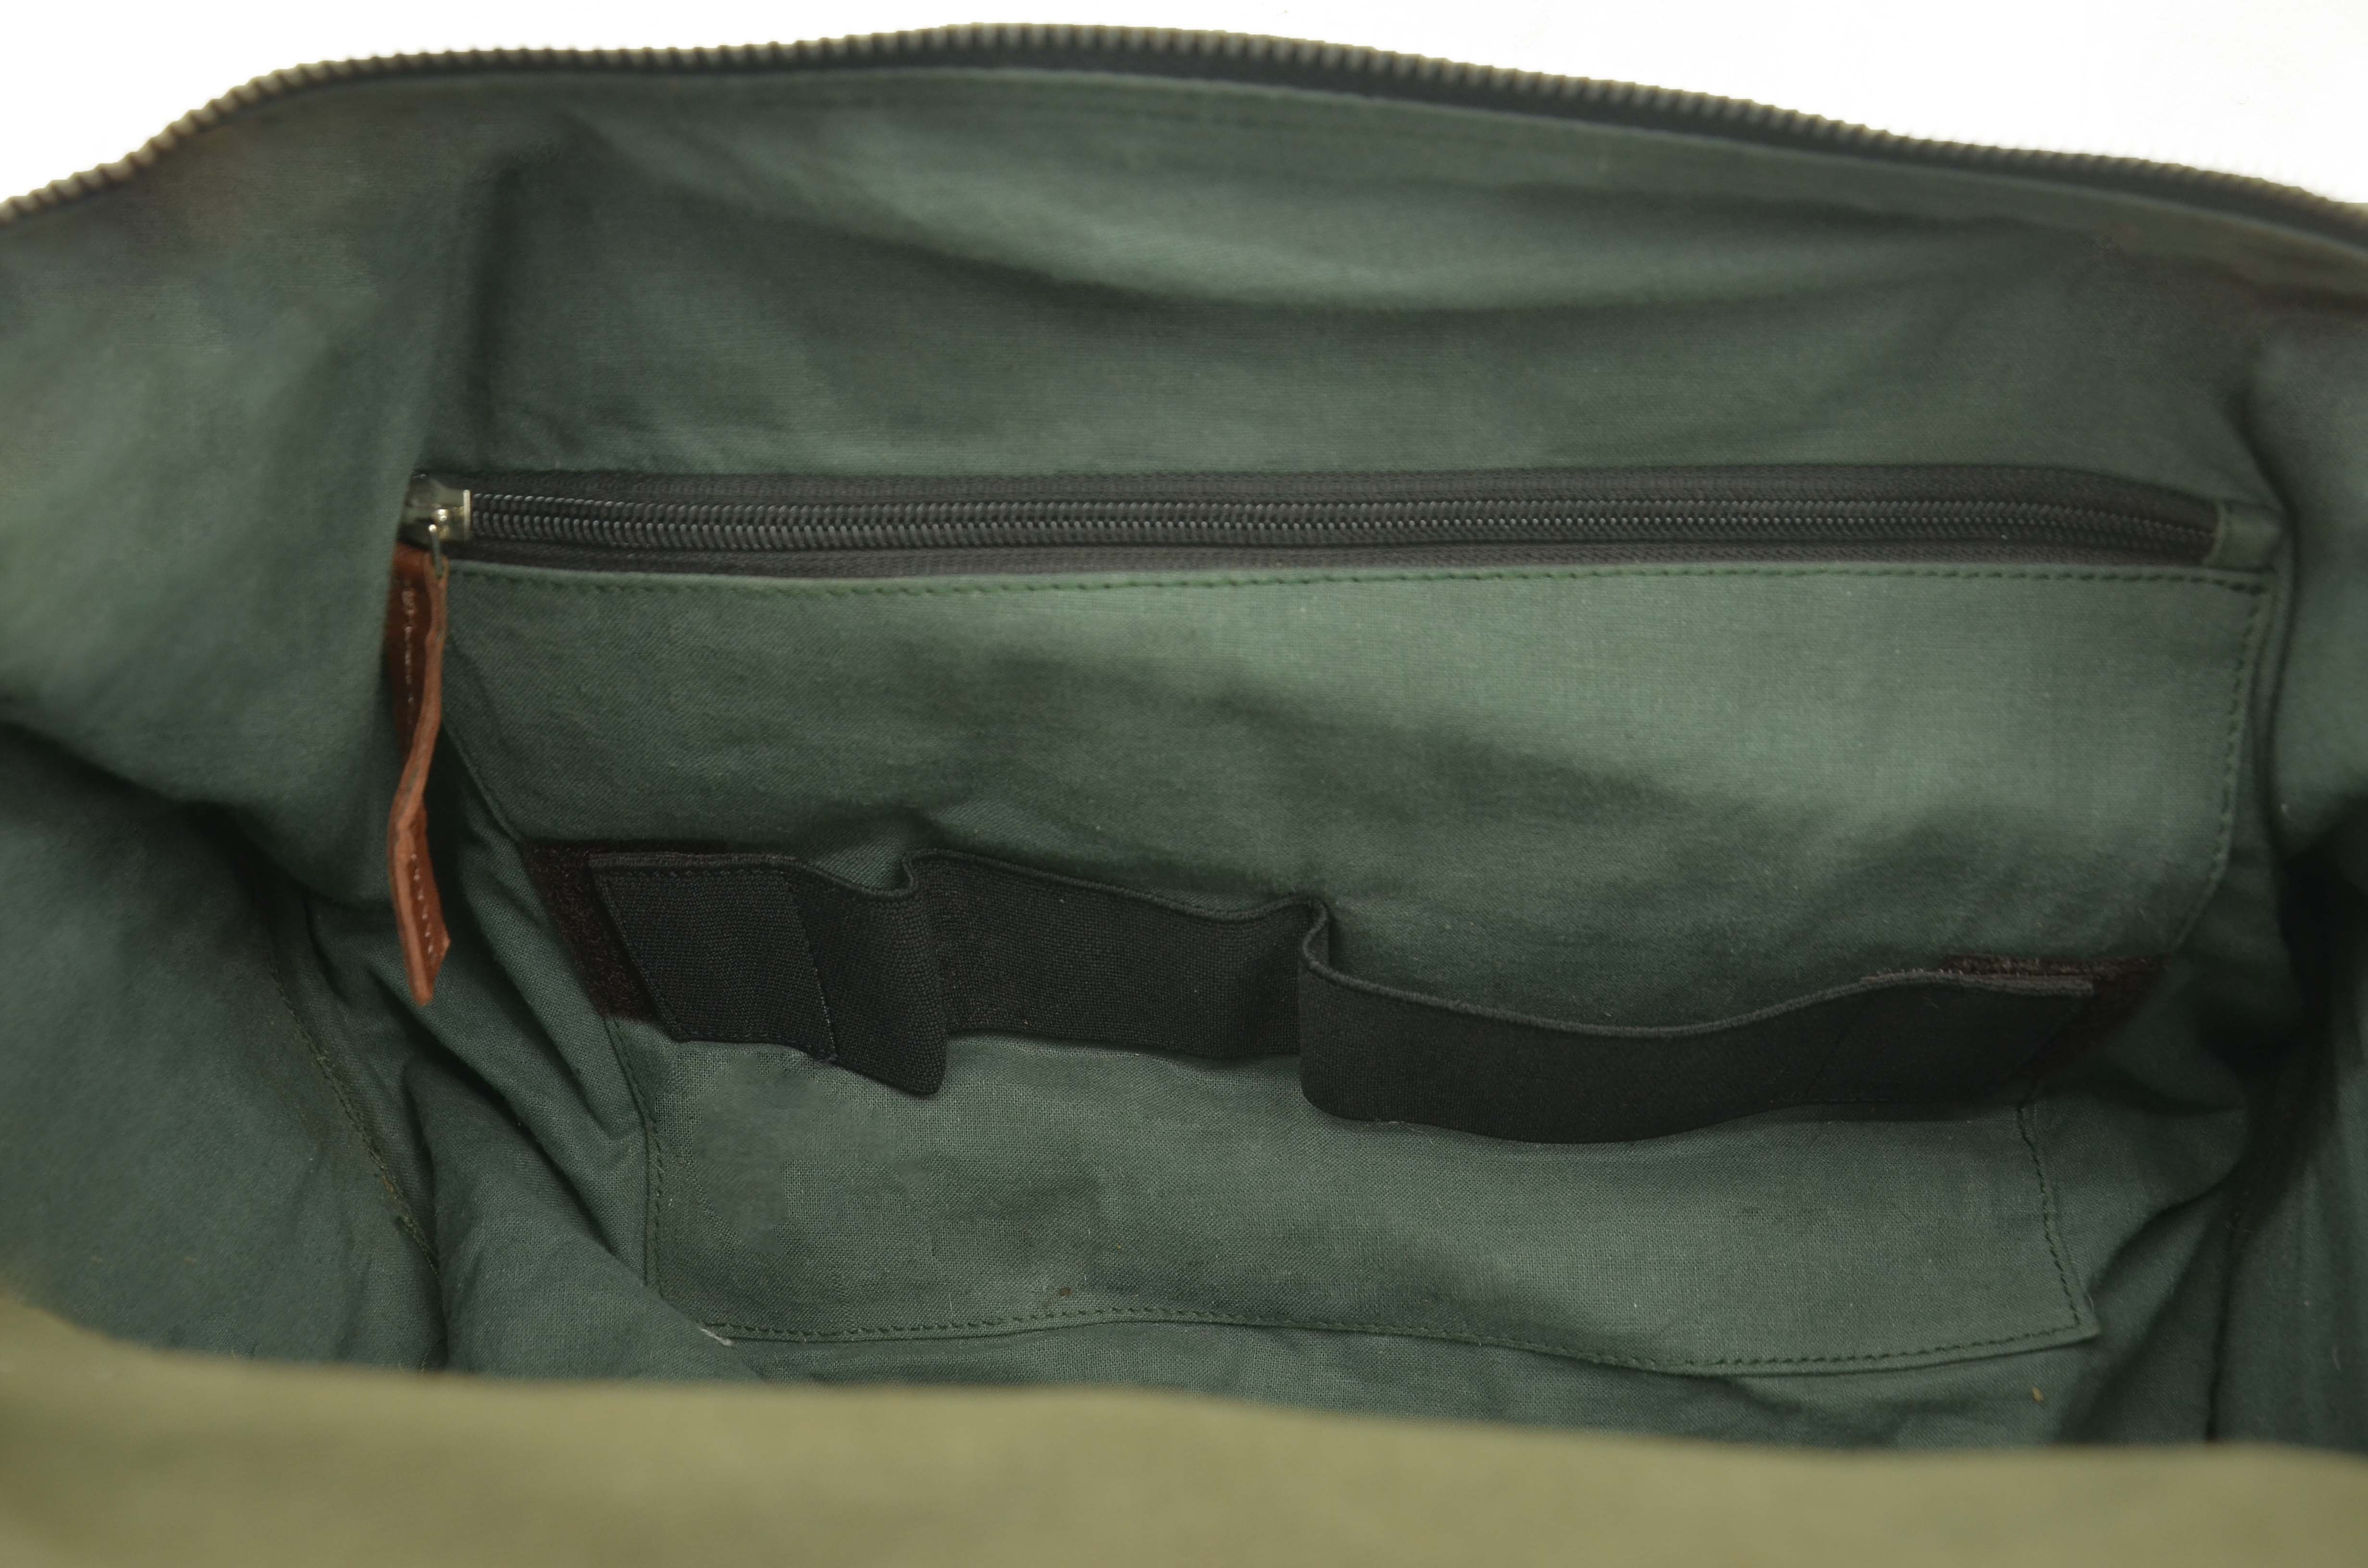 Water Resistant Travel Bag